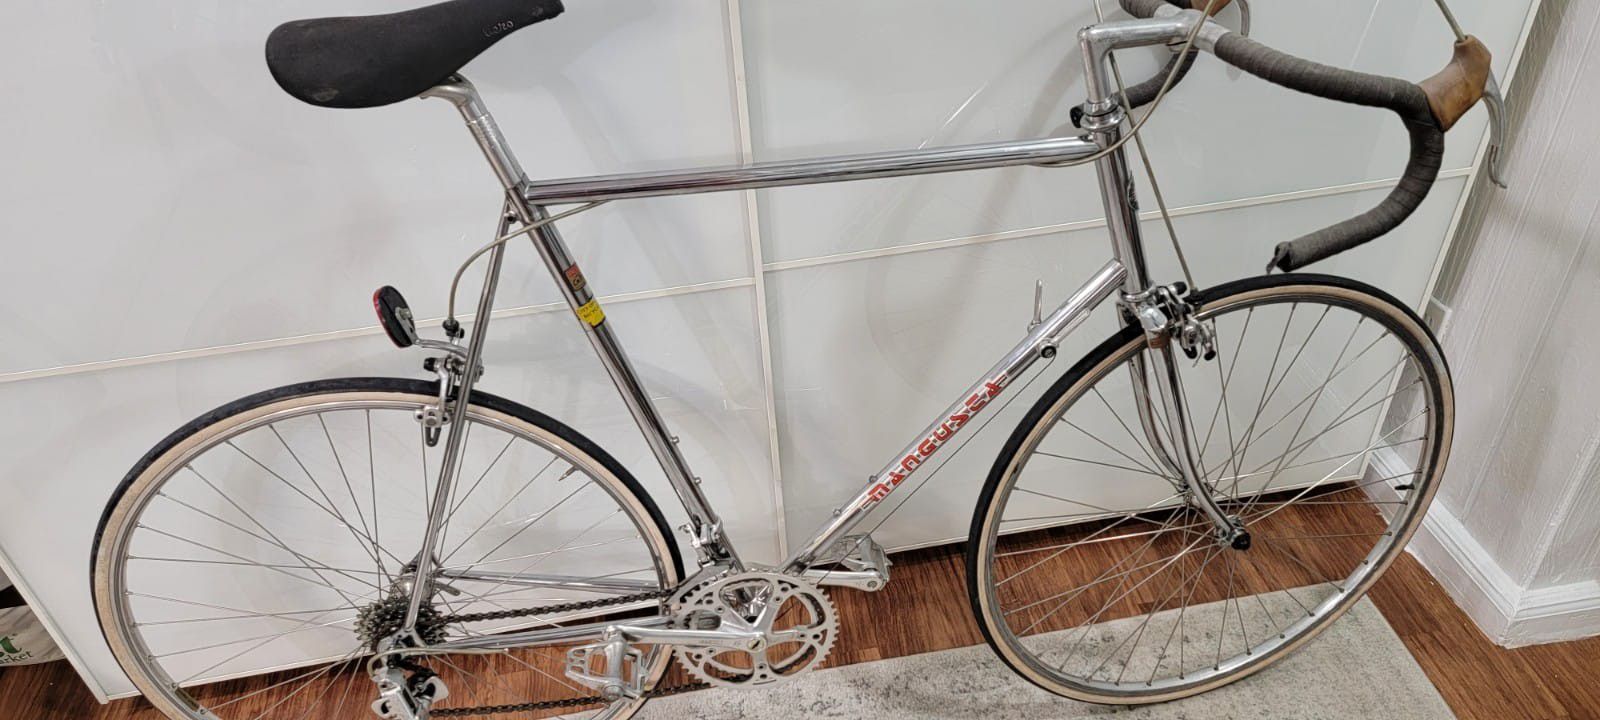 Mangusta 980 63cm Road Bicycle.....